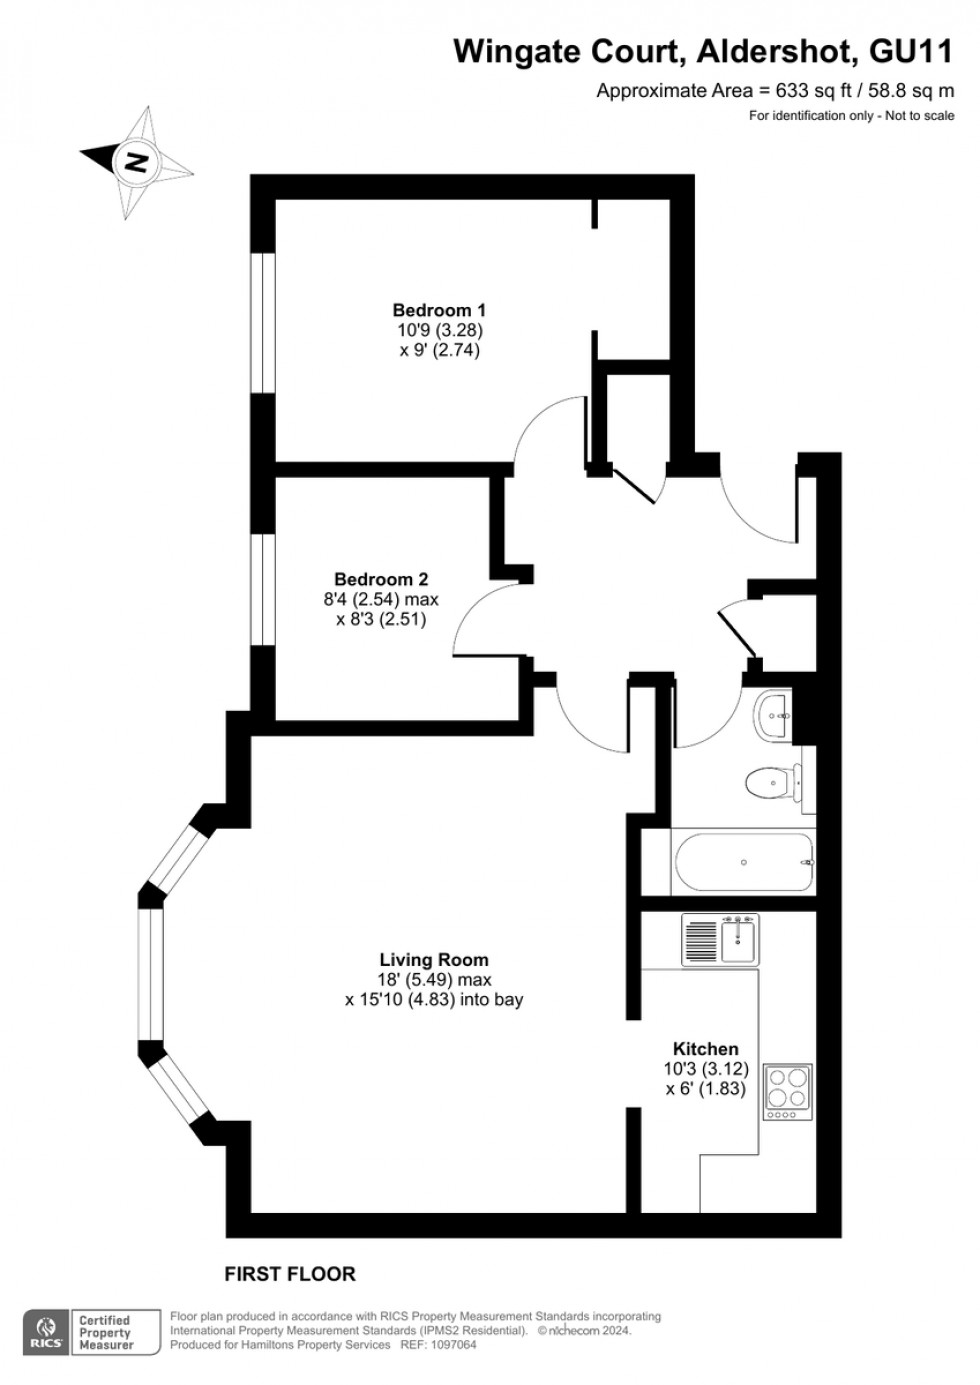 Floorplan for Wingate Court, Aldershot